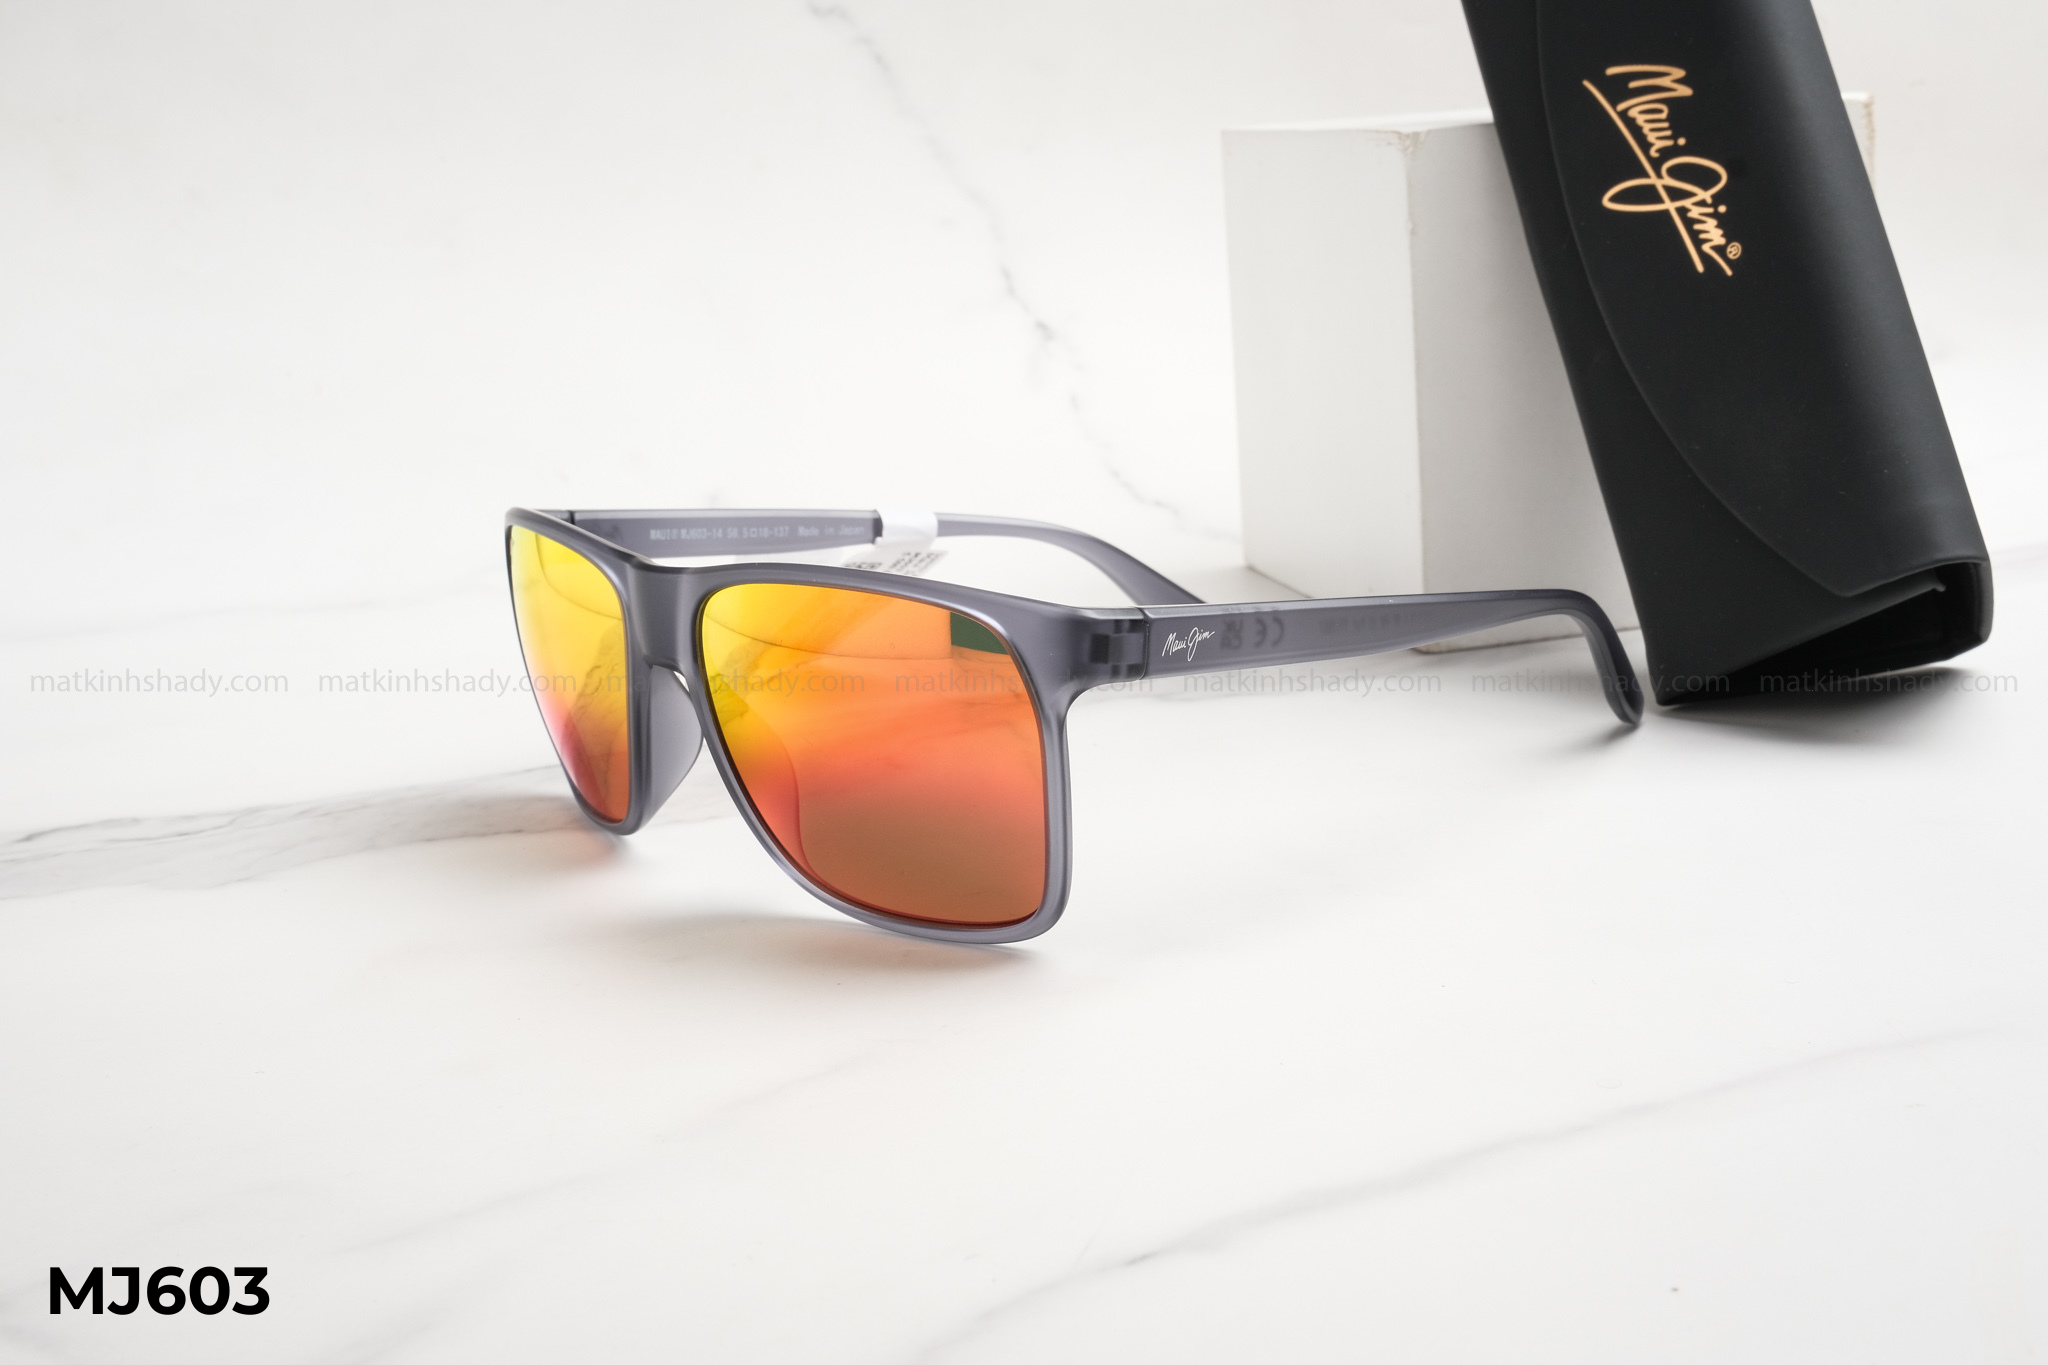  Maui Jim Eyewear - Sunglasses - MJ603 